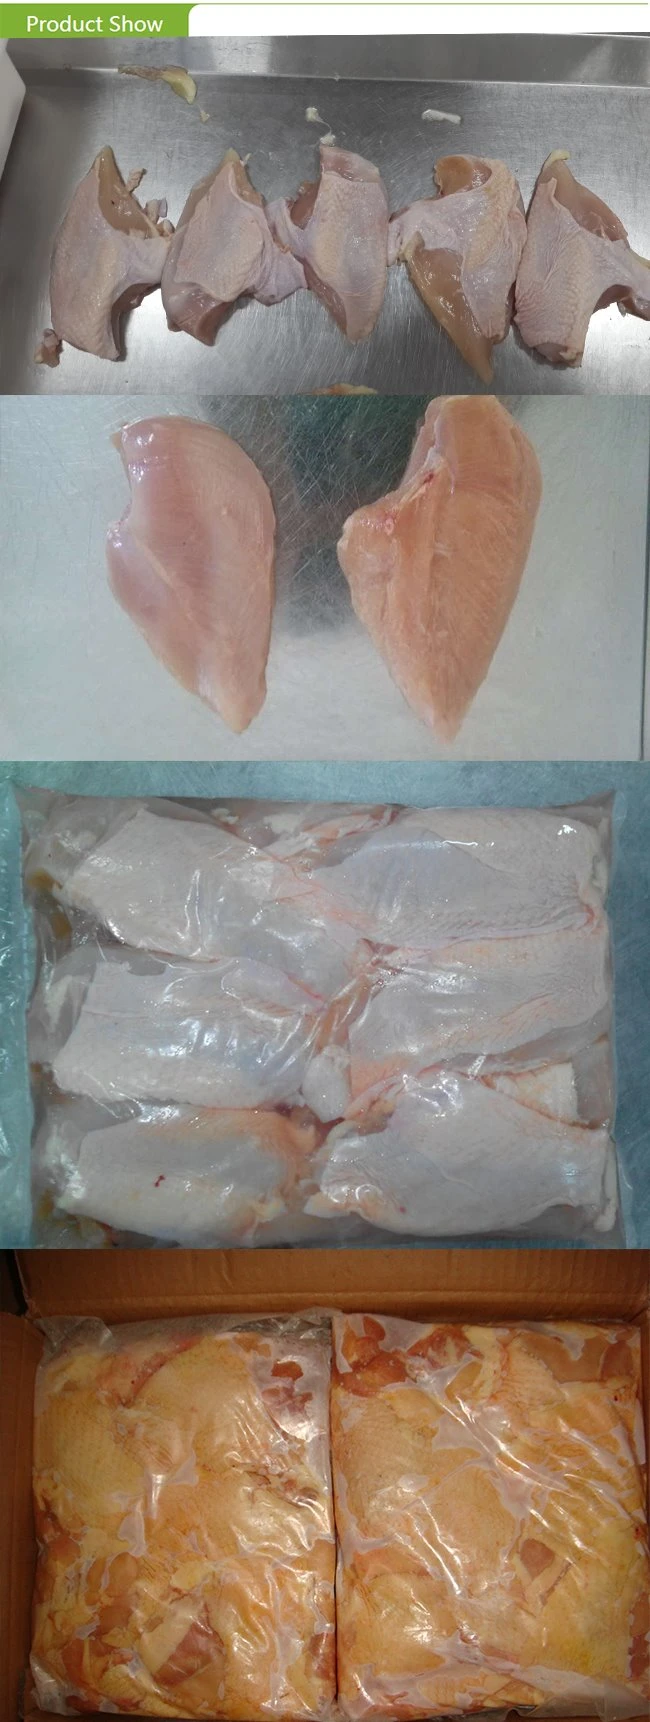 Frozen Halal Chicken Breast Skinless Boneless